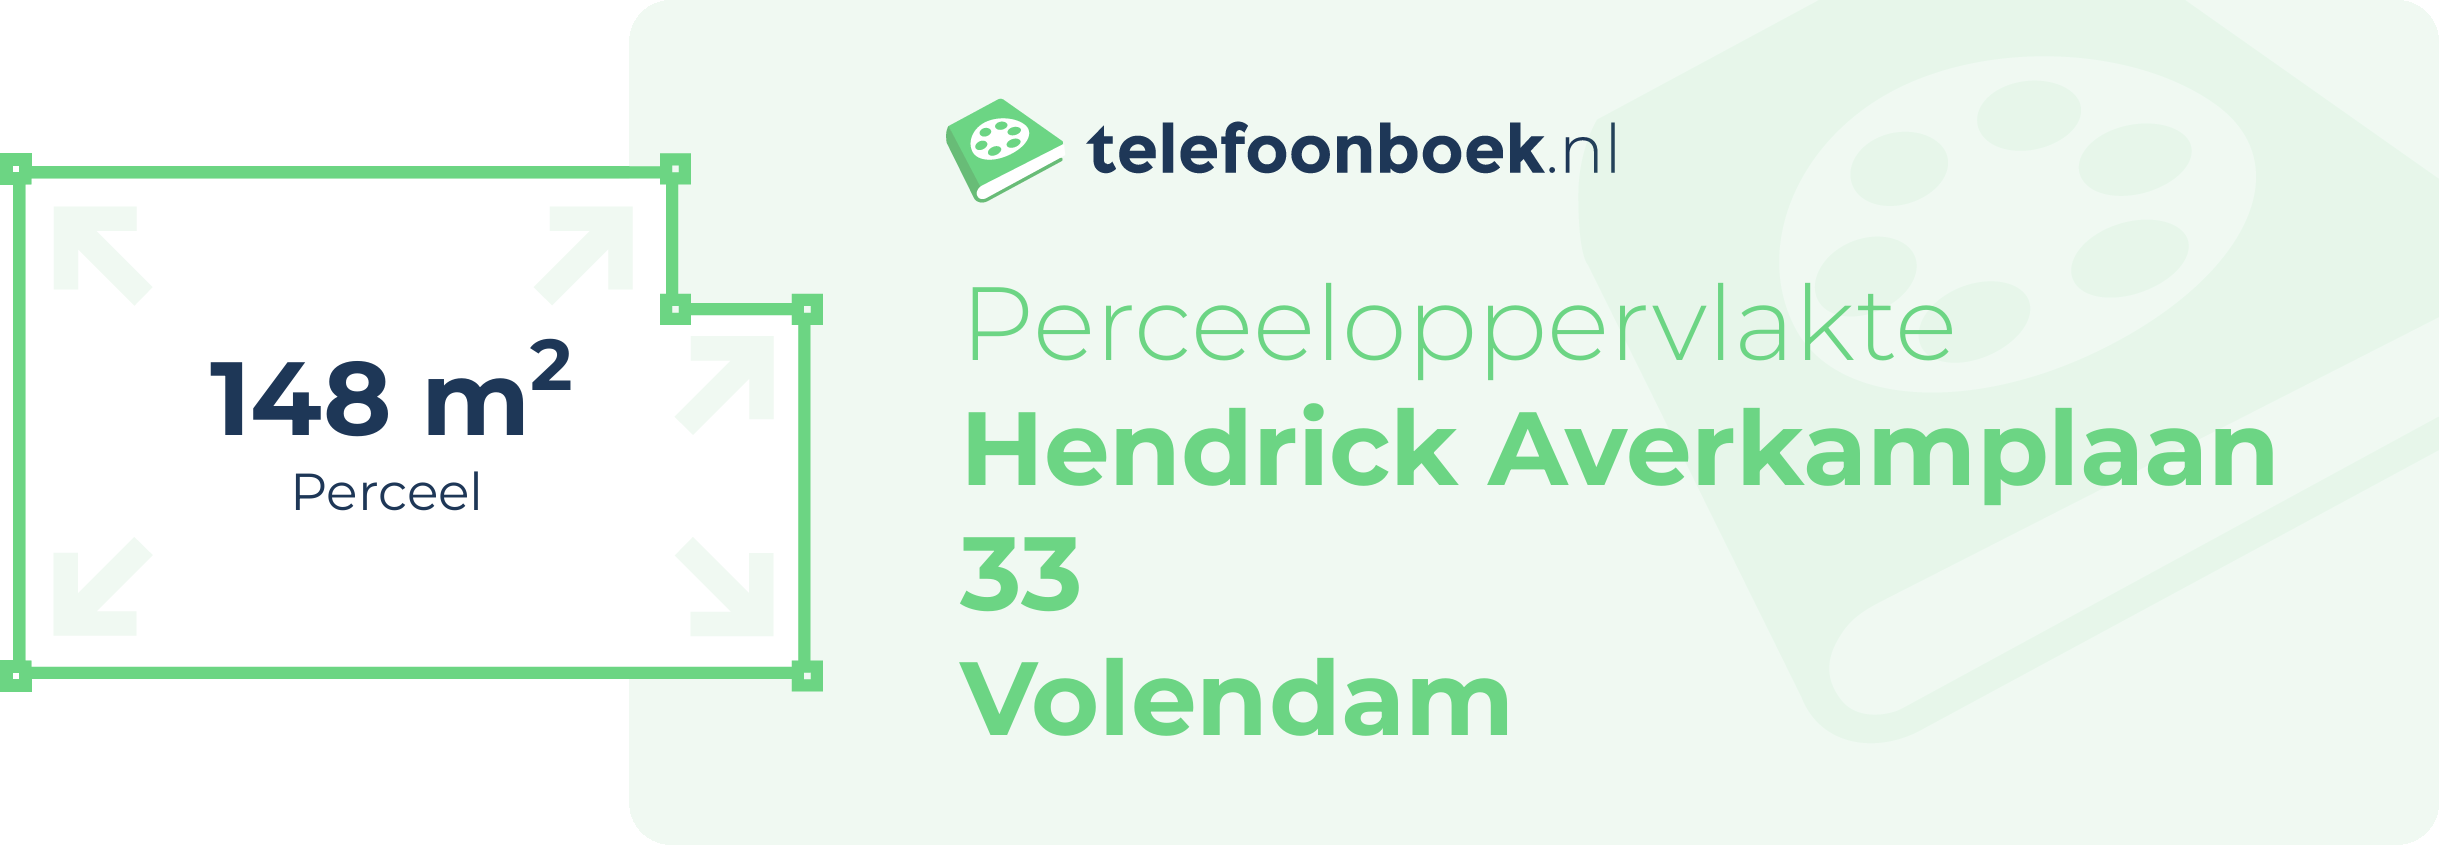 Perceeloppervlakte Hendrick Averkamplaan 33 Volendam